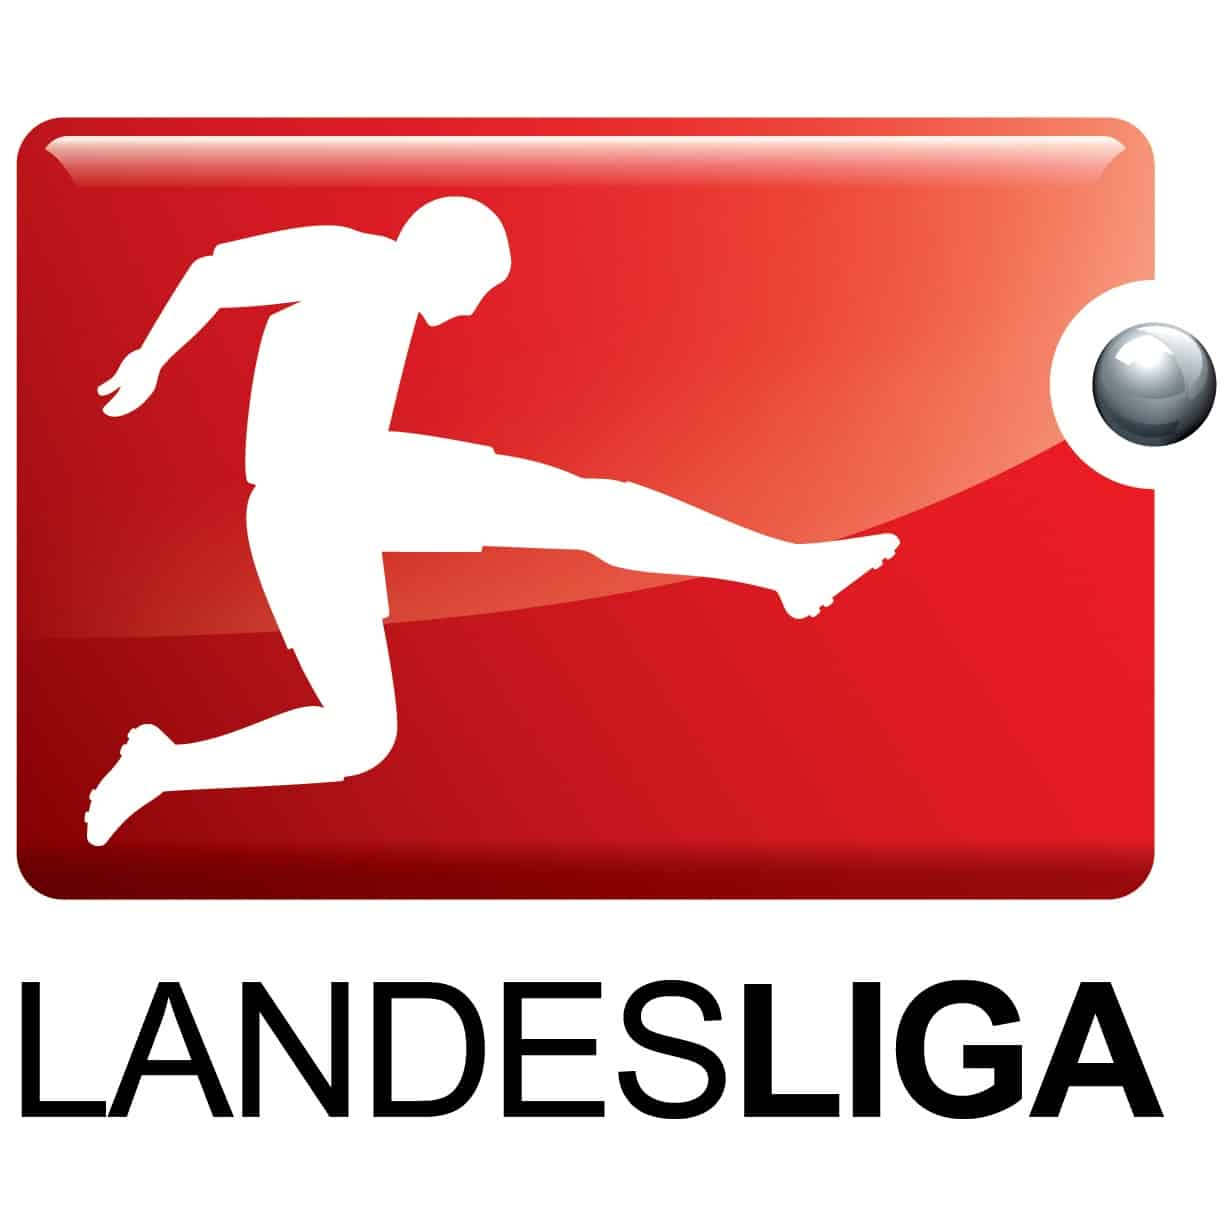 landesliga-logo